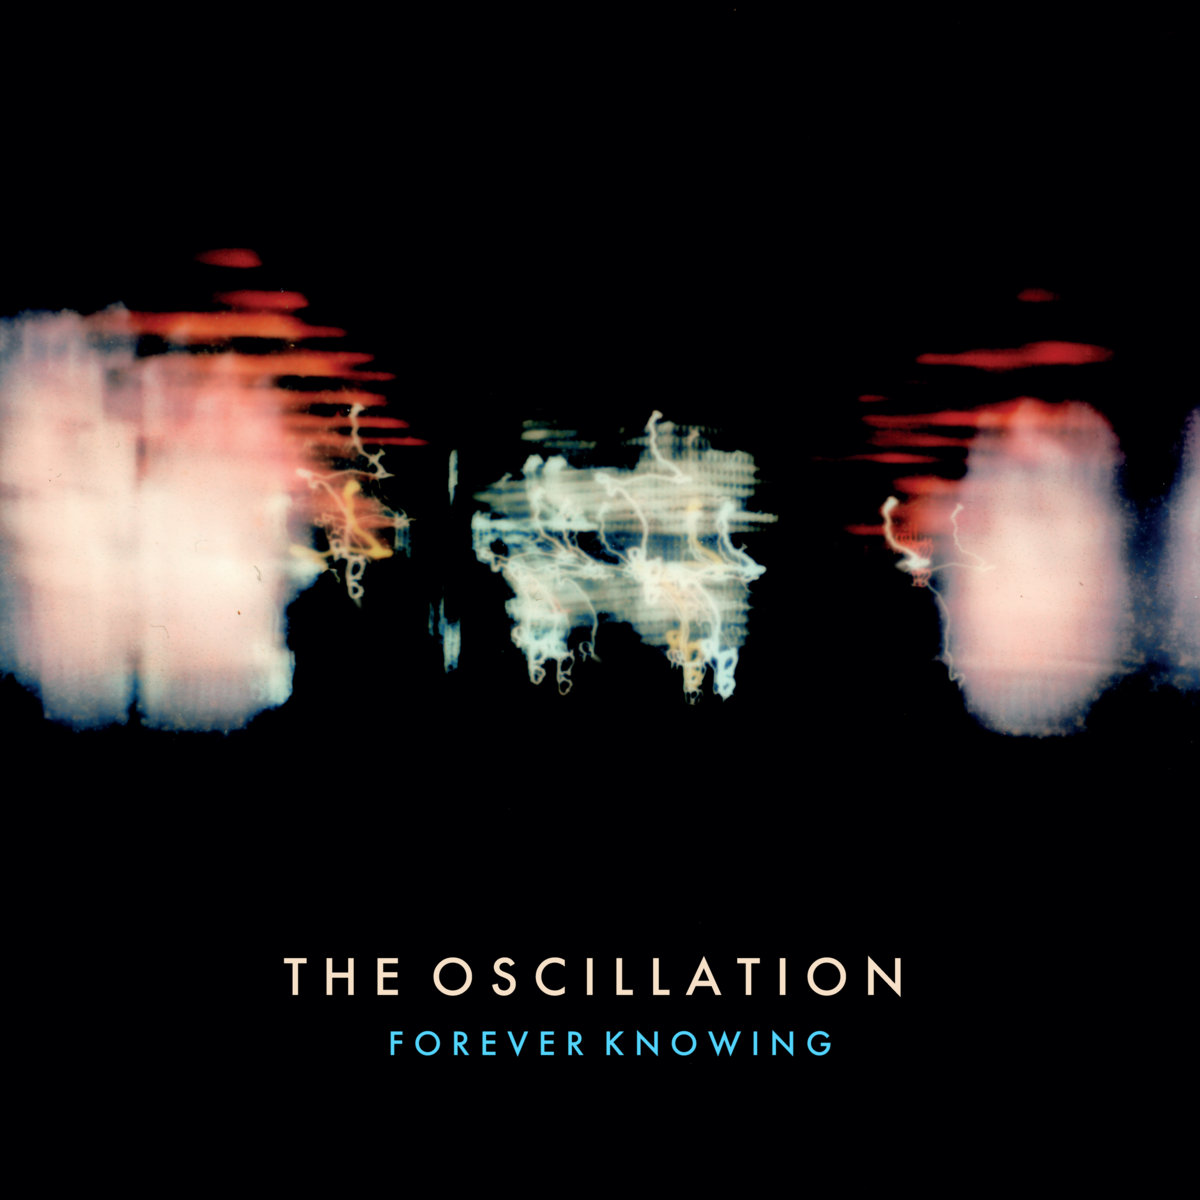 The Oscillation - Untold Futures